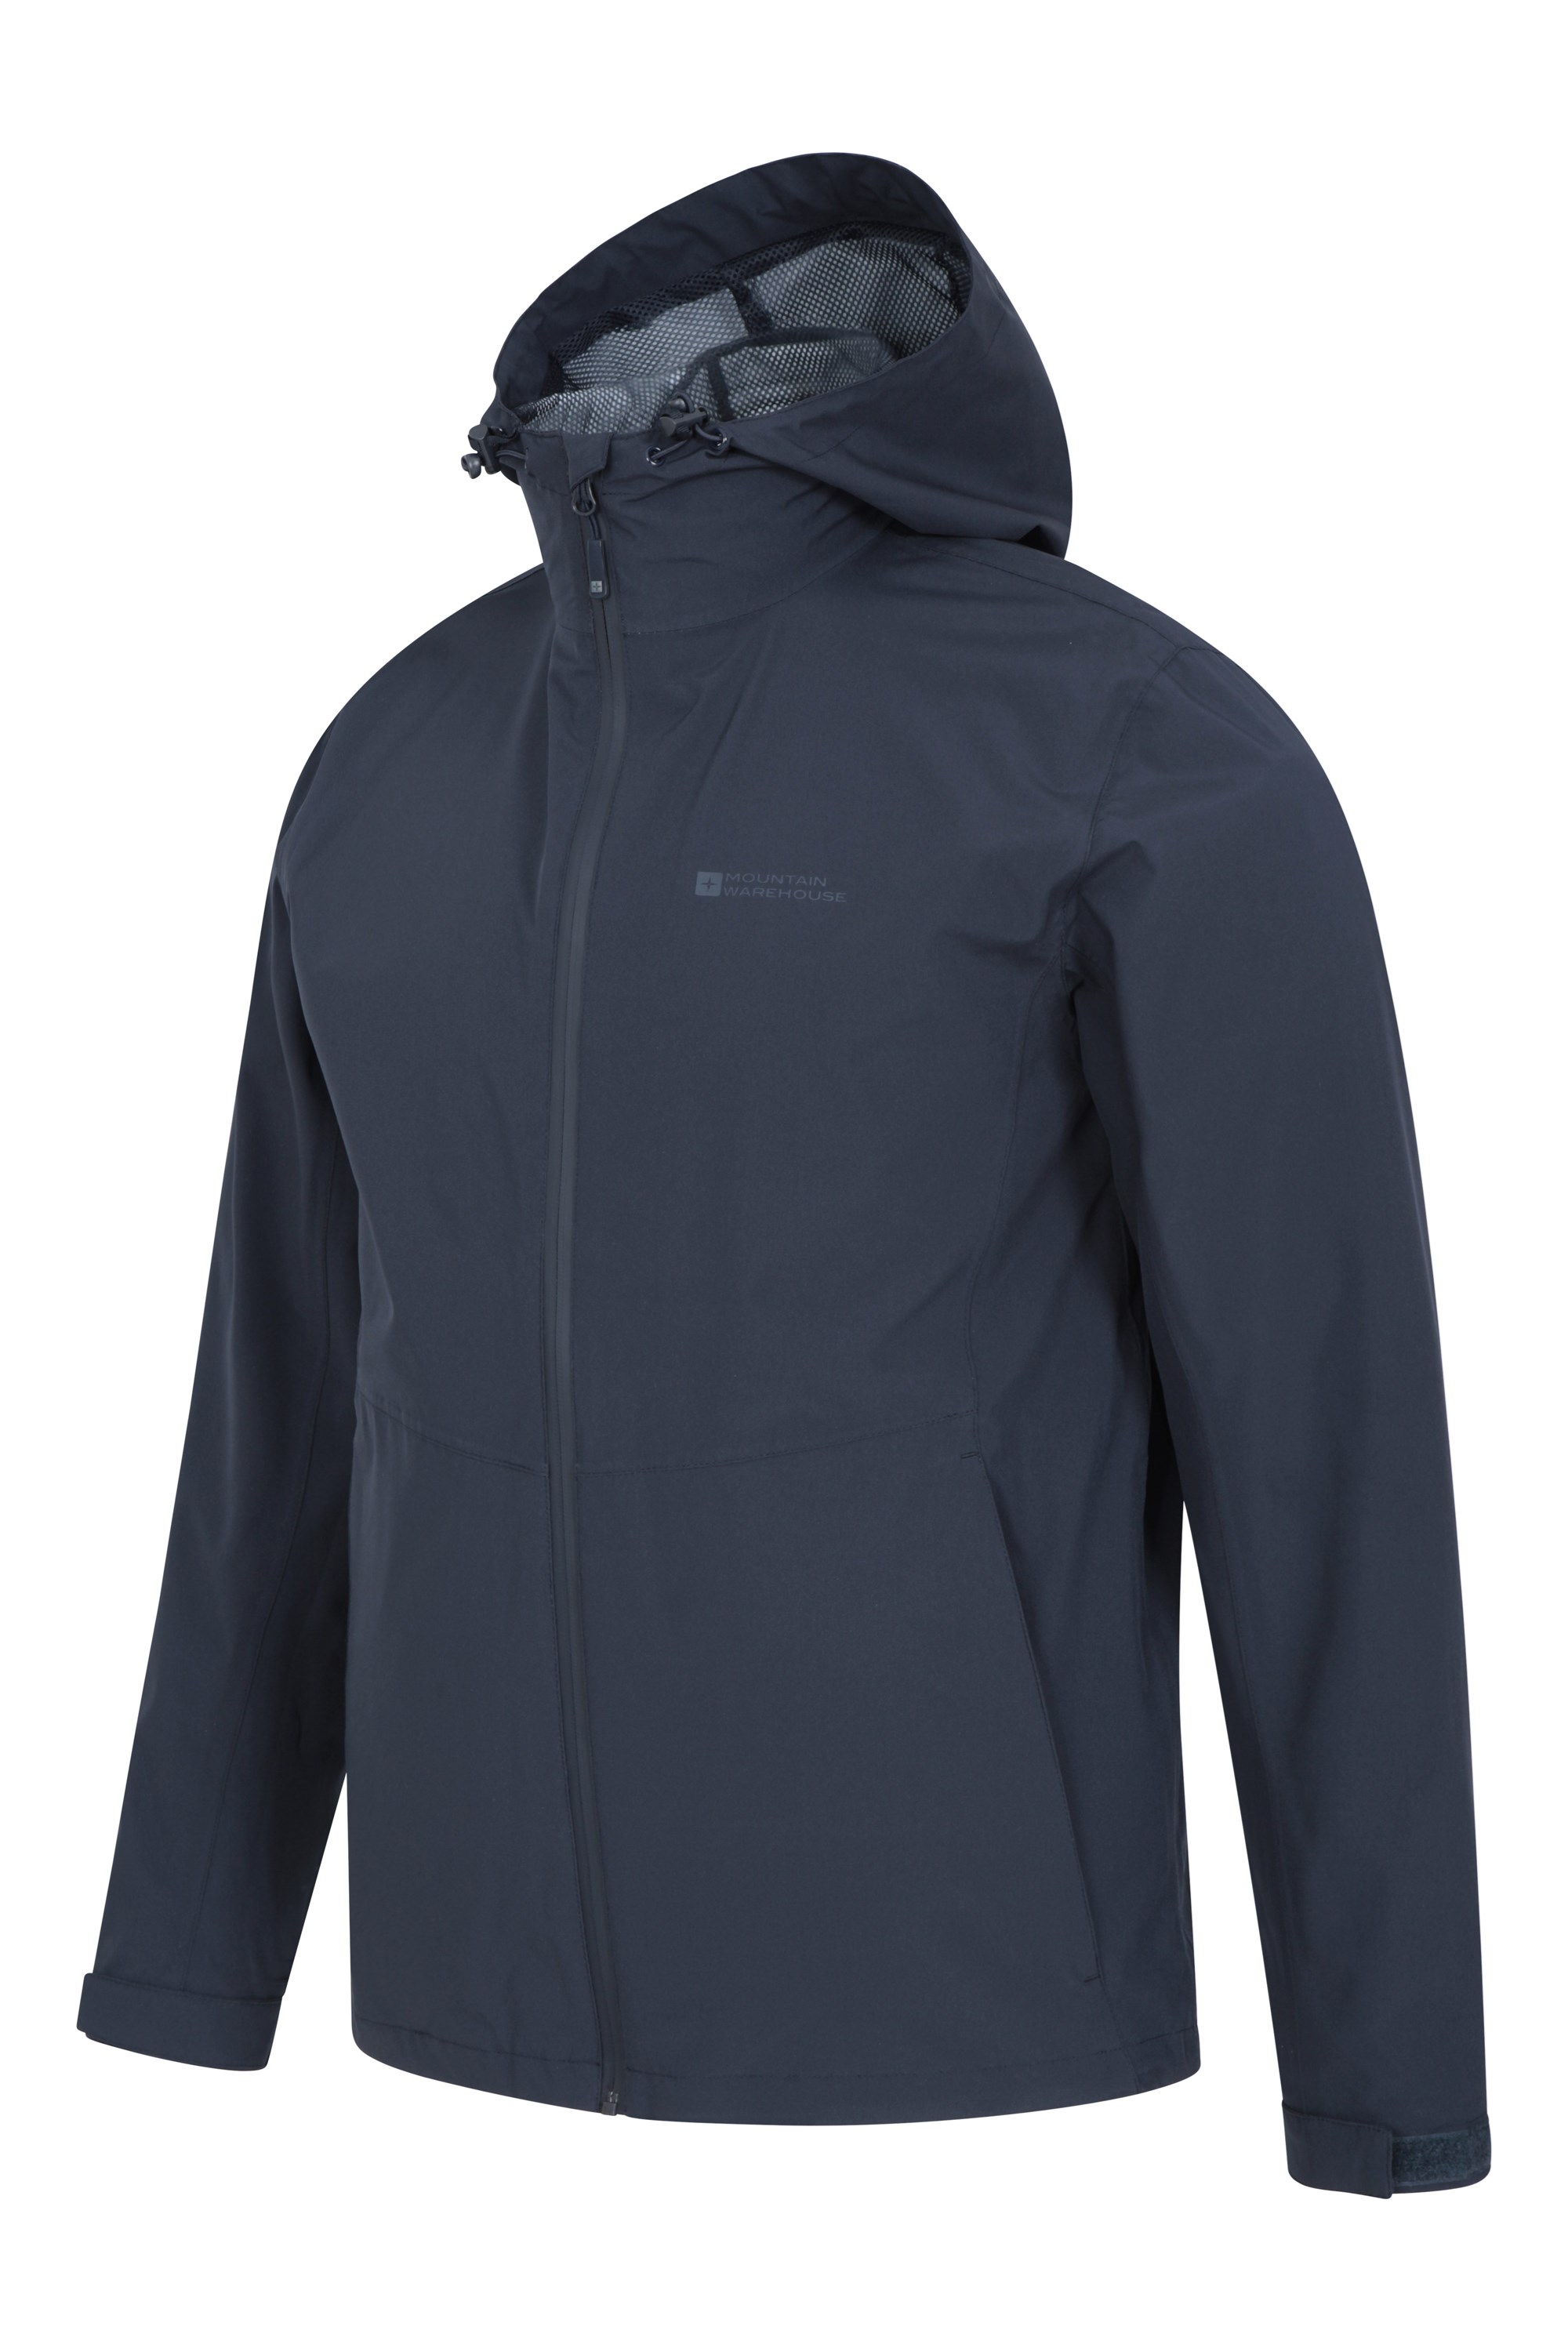 Best for Travelling Hiking Taped Seams Mountain Warehouse Covert Mens Waterproof Jacket Trekking Adjustable Hood Lightweight Rain Jacket Breathbale Coat